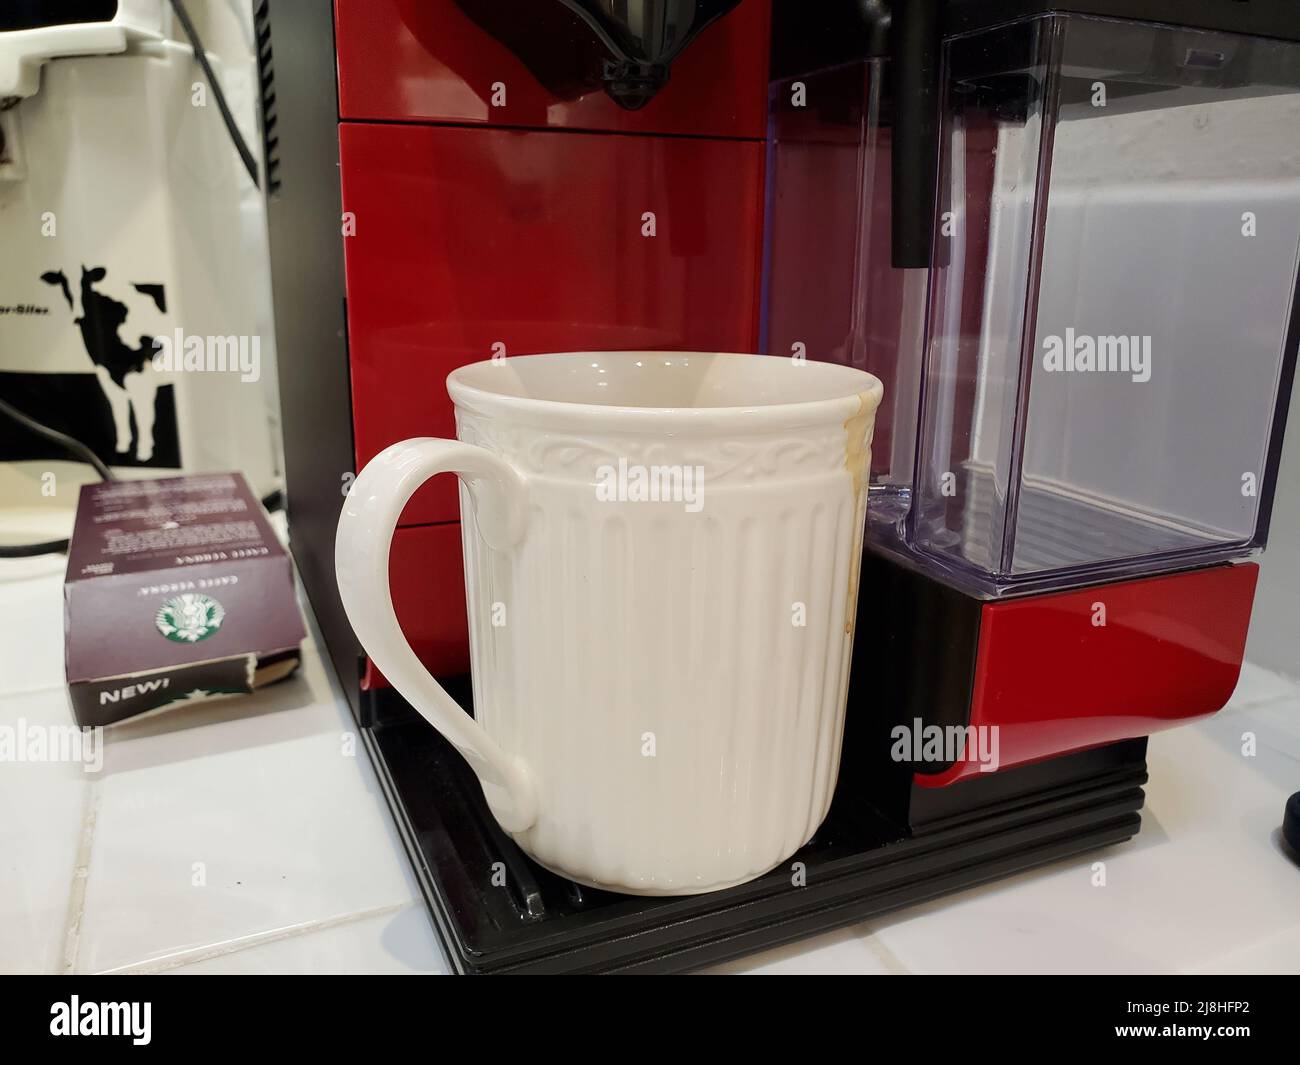 A mug is visible in a Nespresso coffee maker, Lafayette, California, March 30, 2022. Photo courtesy Sftm. Stock Photo